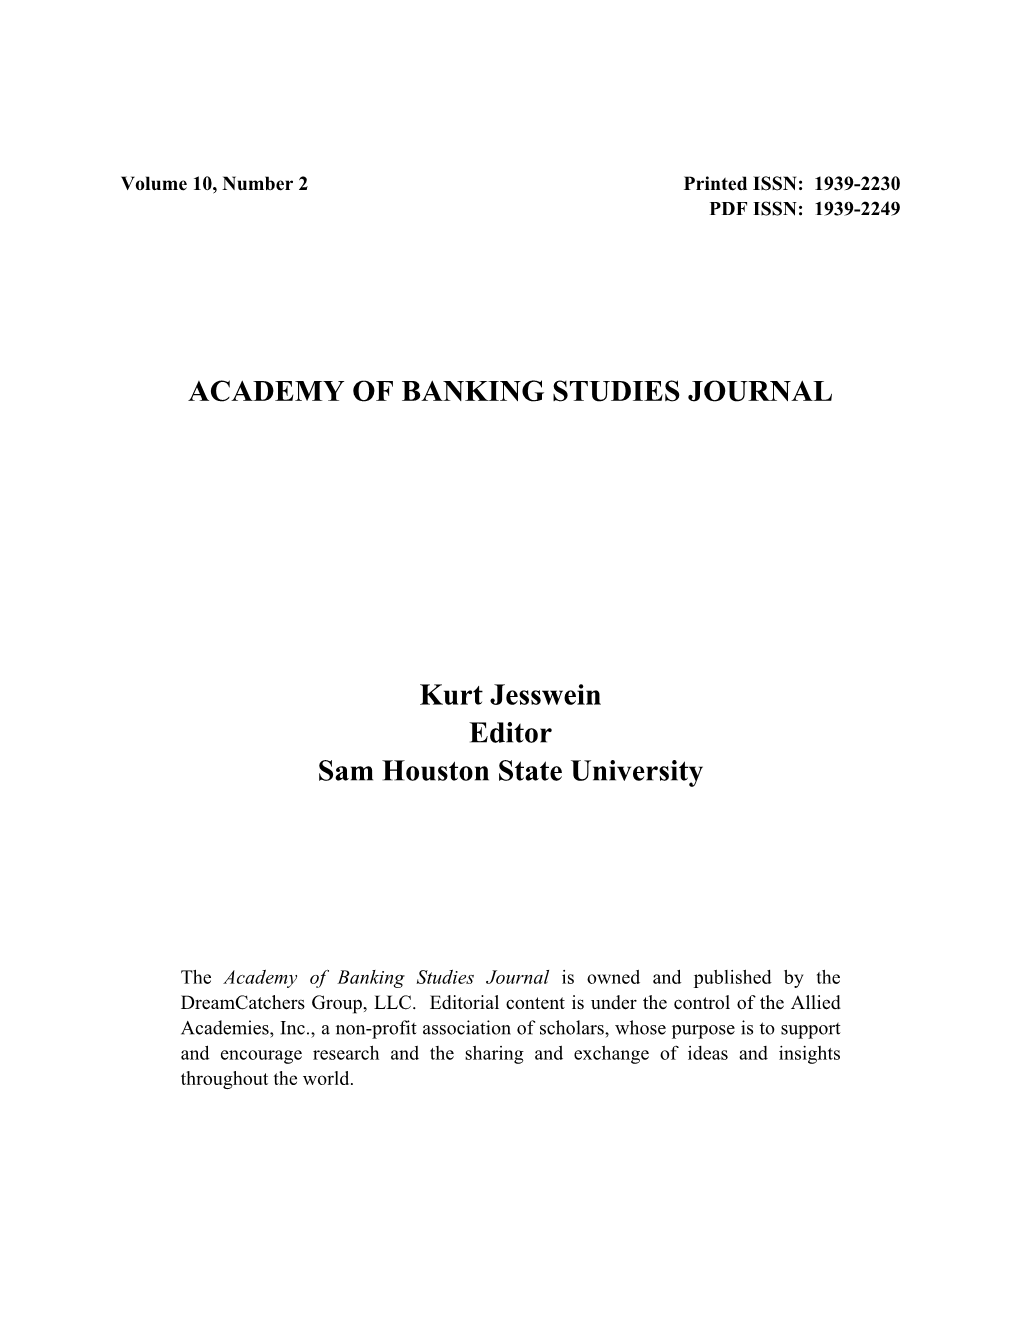 ACADEMY of BANKING STUDIES JOURNAL Kurt Jesswein Editor